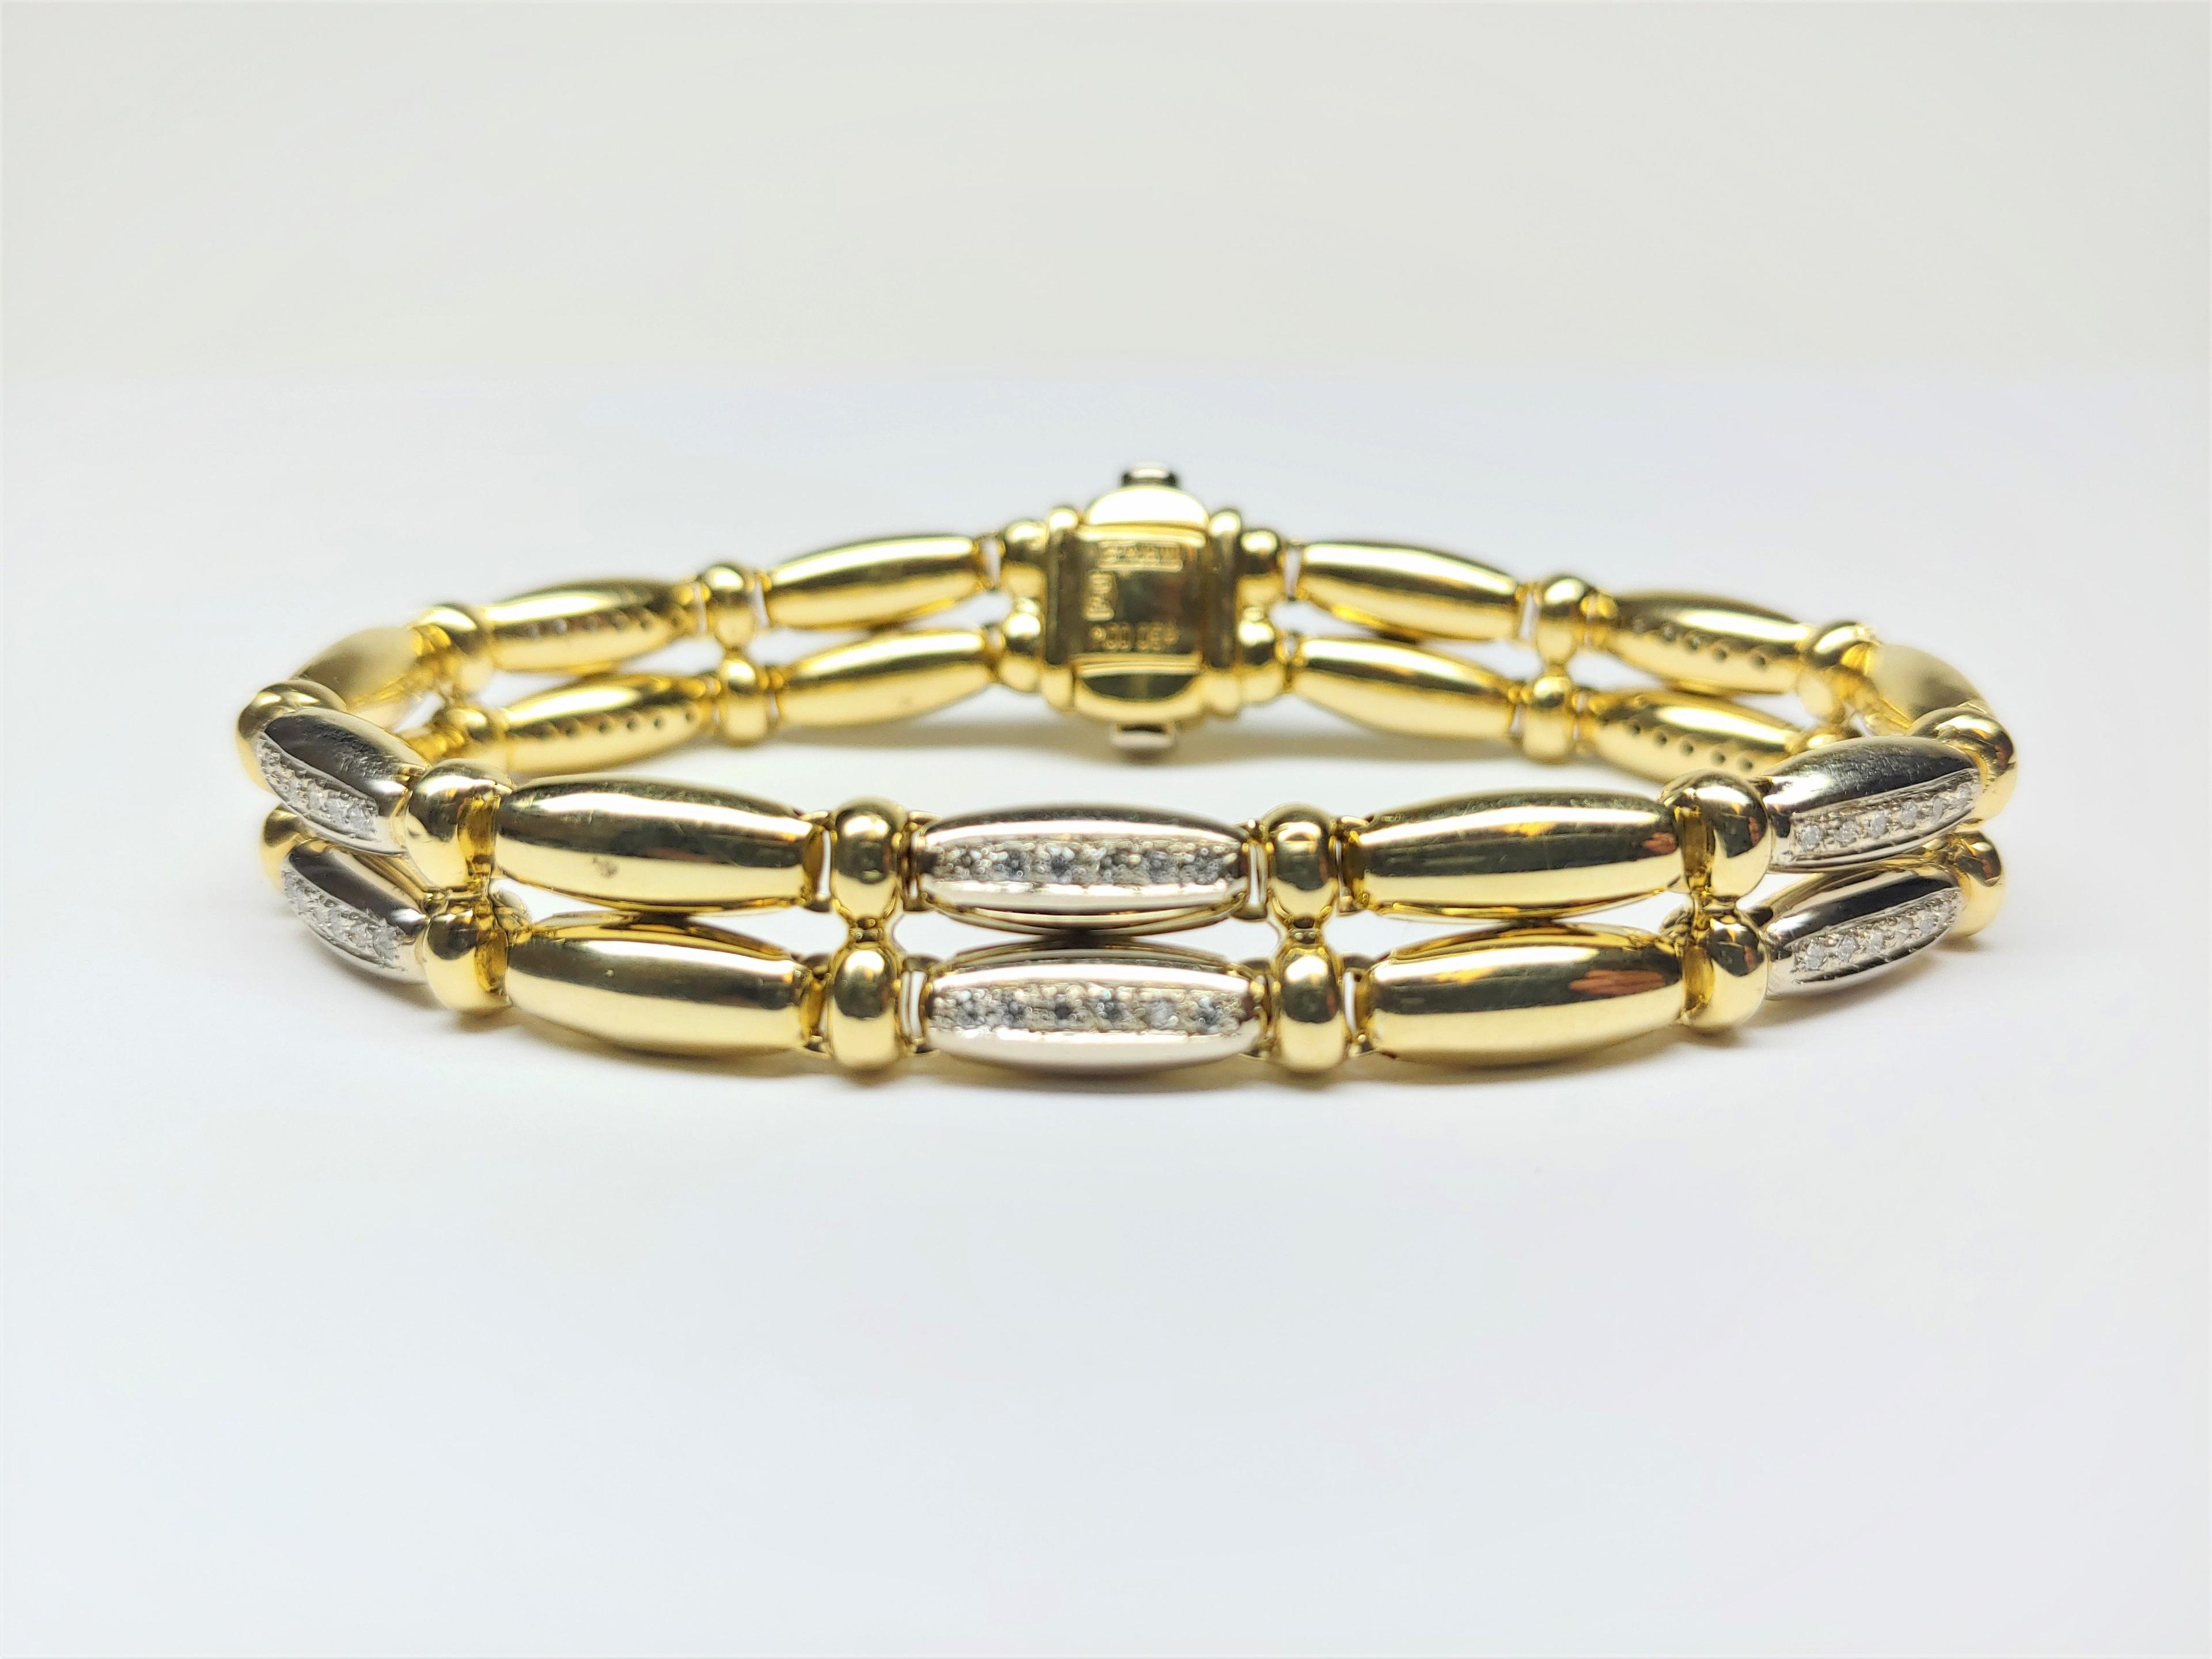 Designer Chimento 18k Yellow Gold Diamond Bracelet Approx 1.50 TCW Retail Price $12k